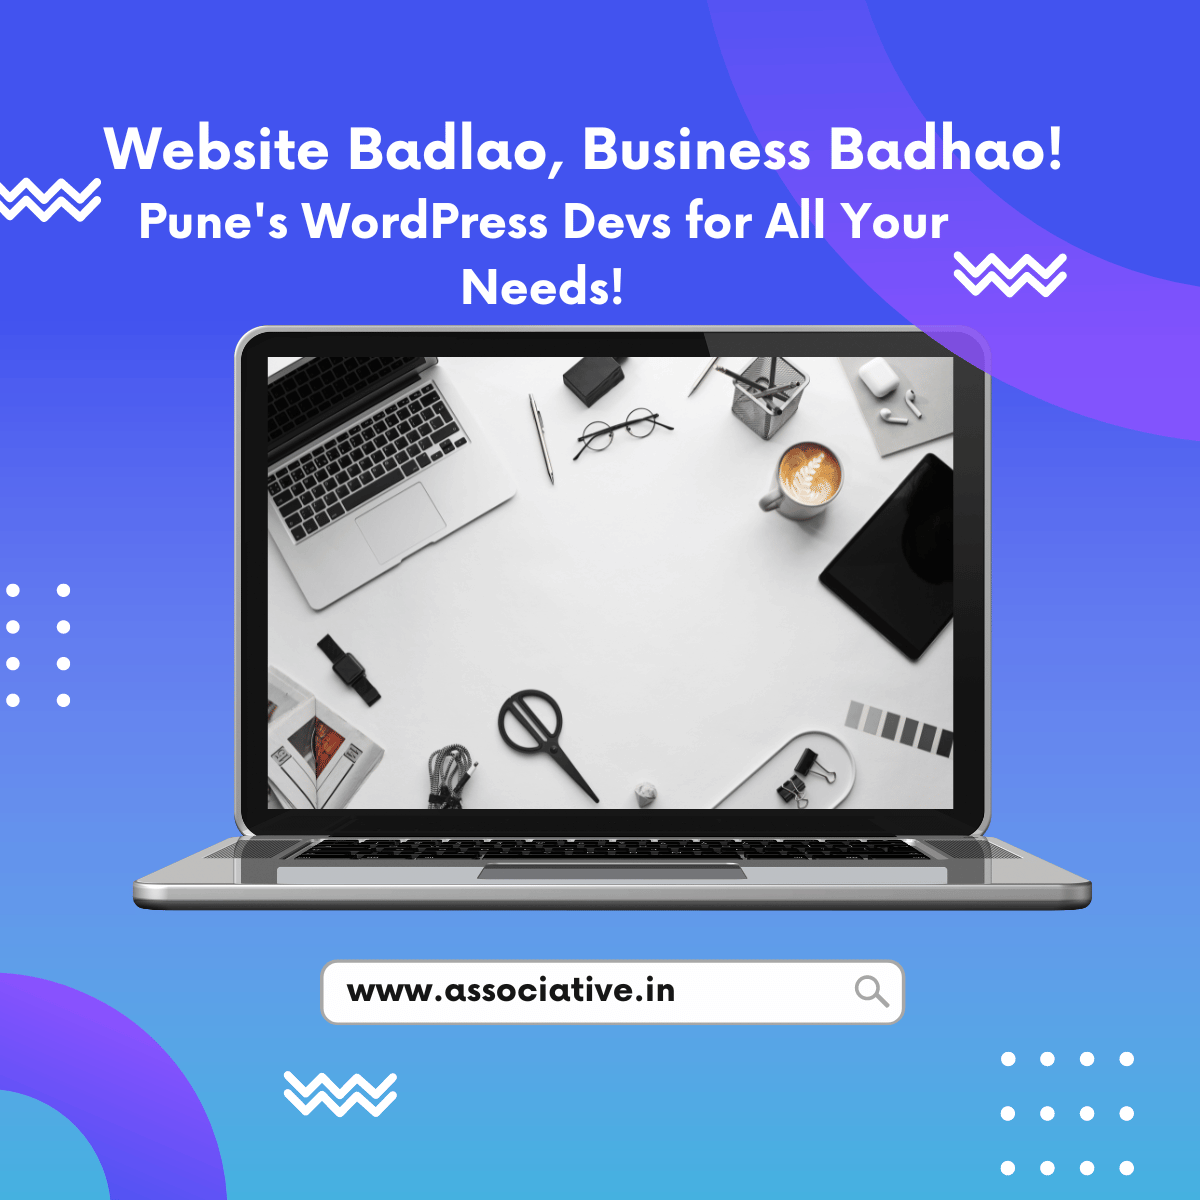 Website Badlao, Business Badhao! Pune's WordPress Devs for All Your Needs!